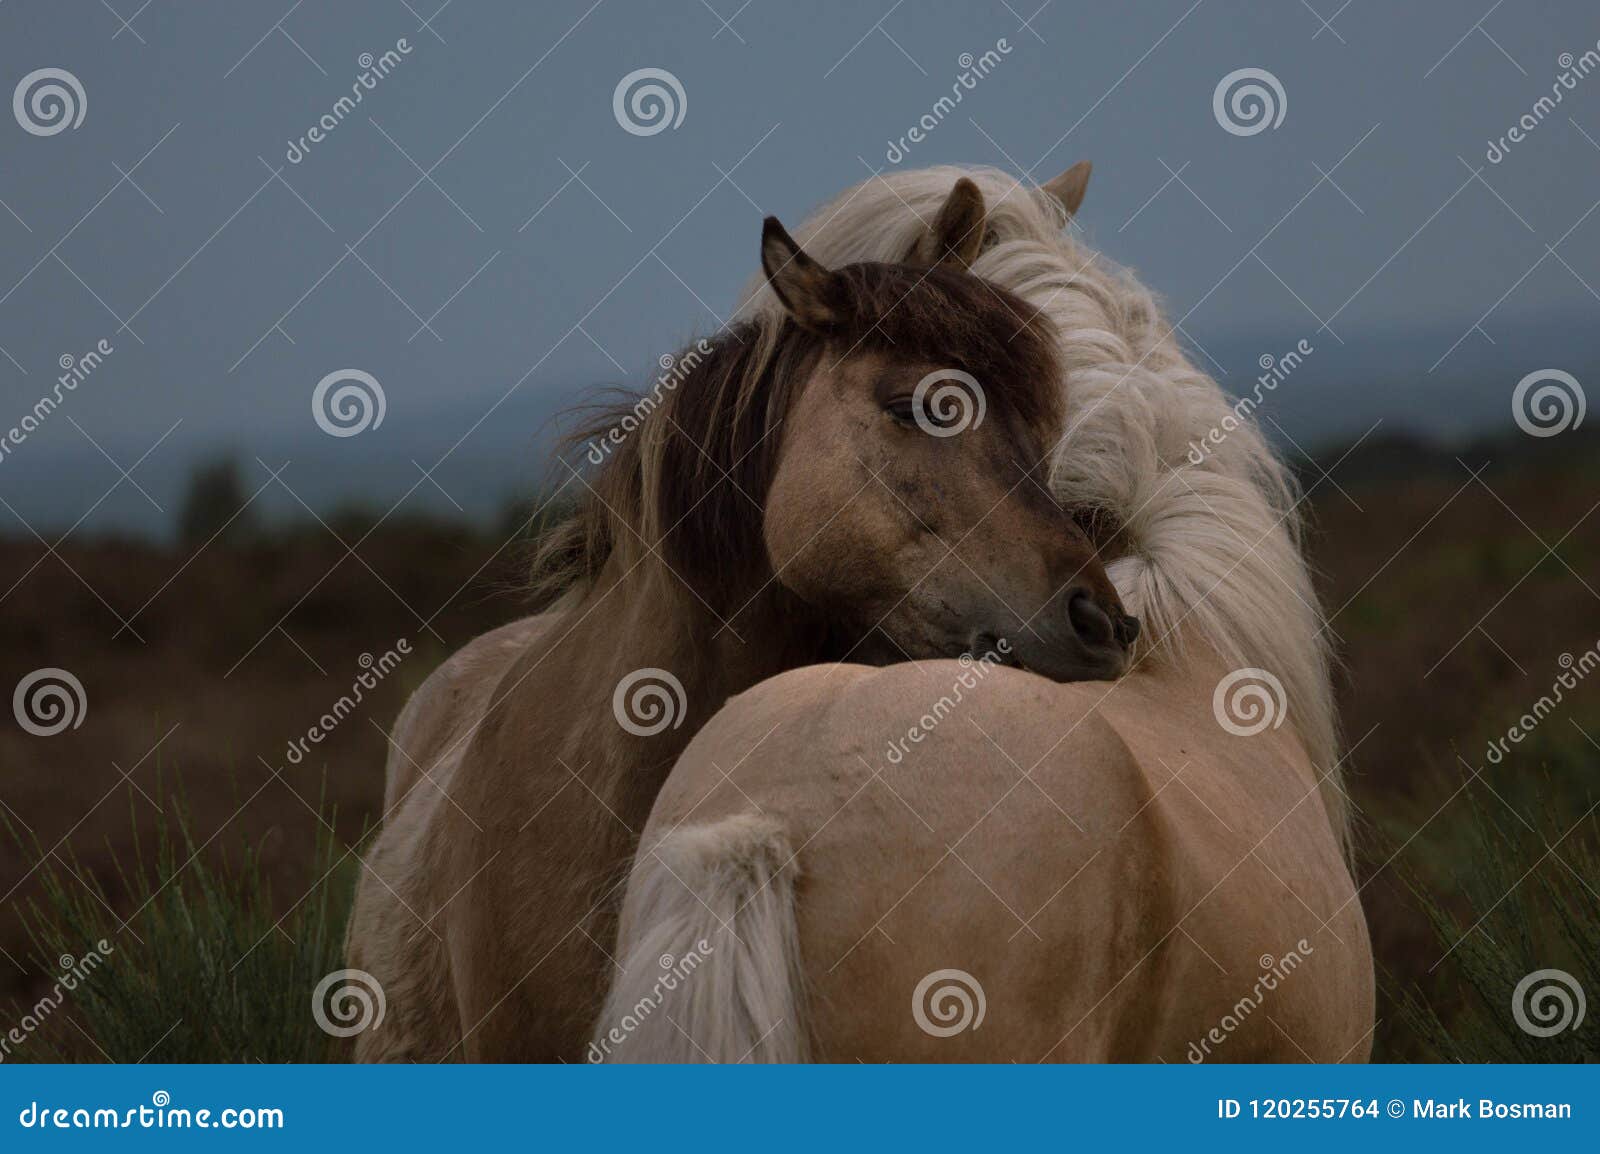 2 wild horses hugging